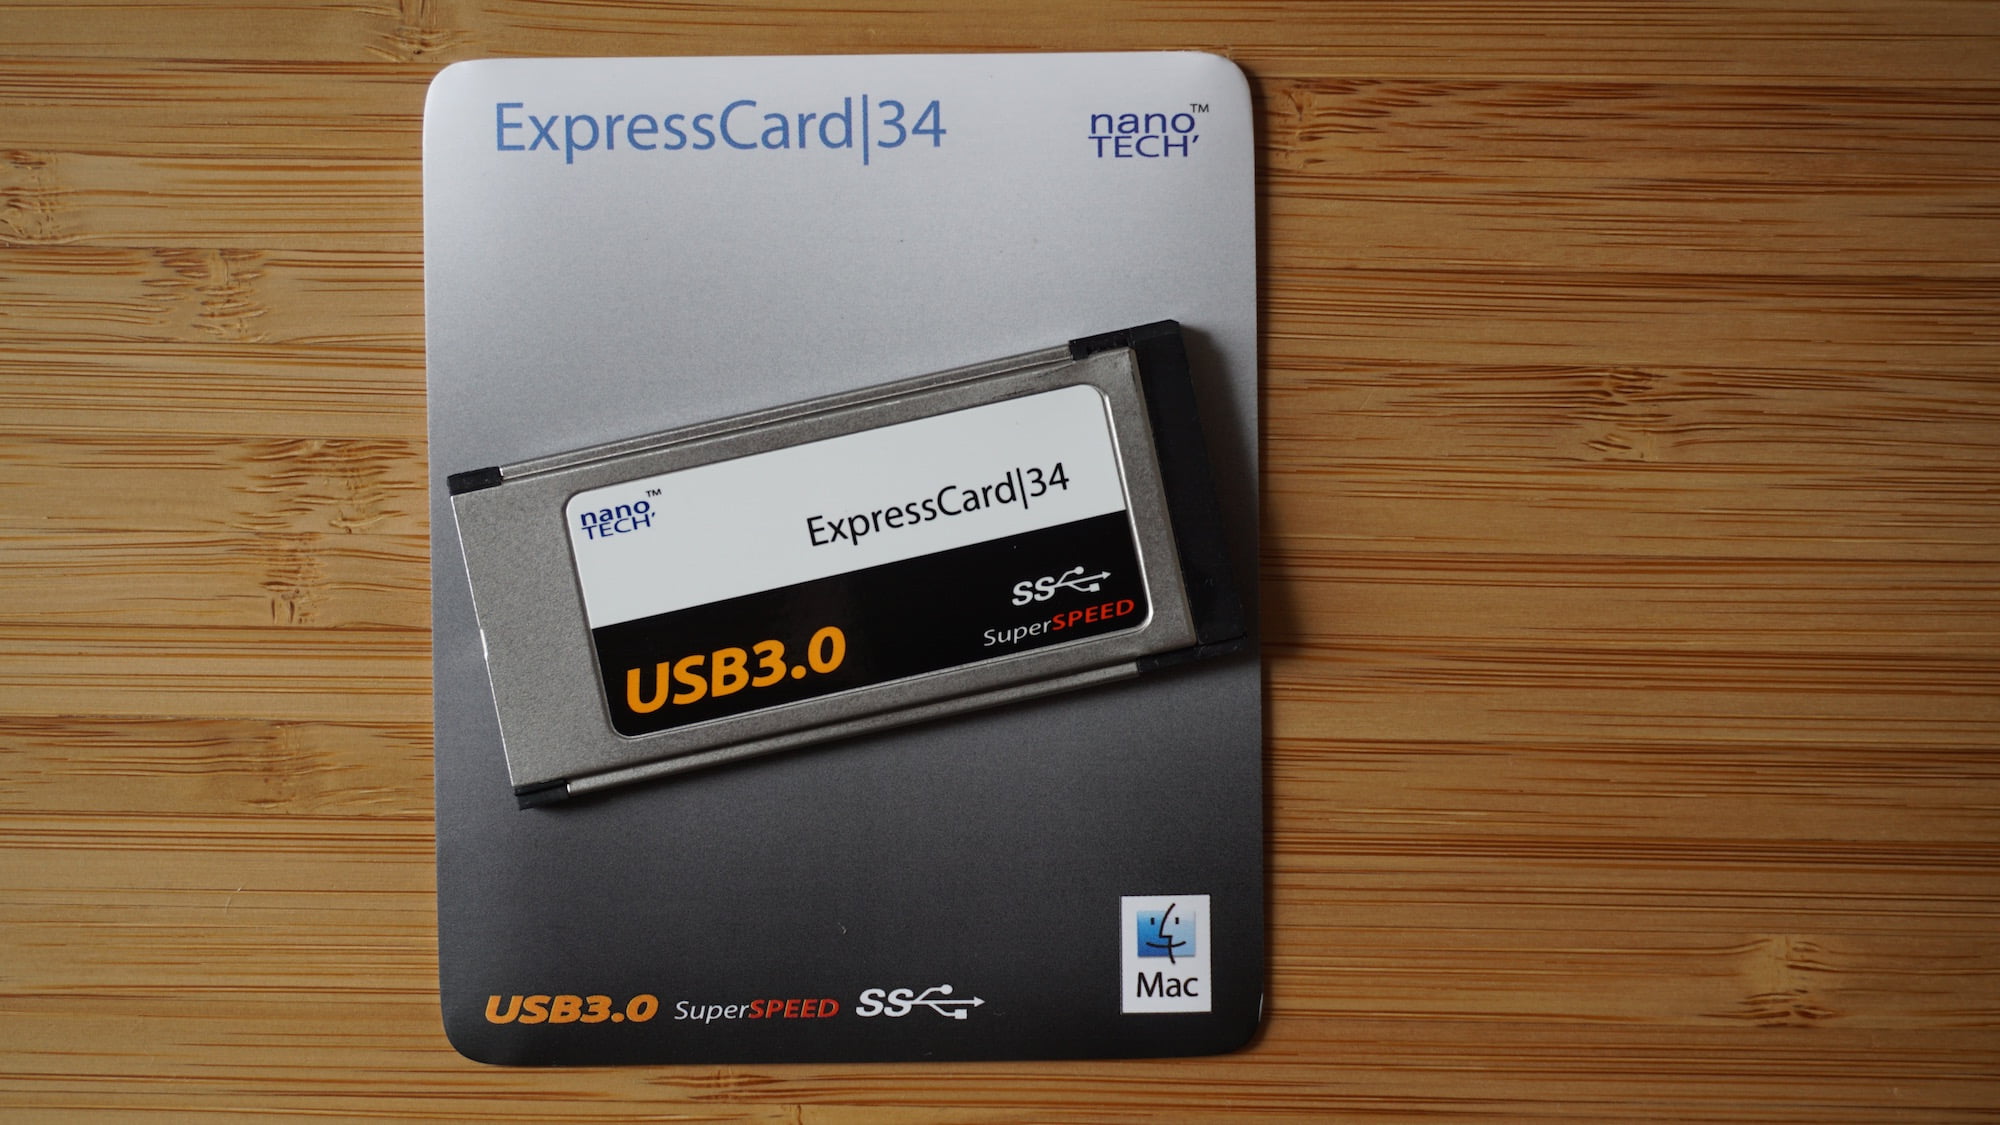 mac driver for expresscard 34 usb 3.0